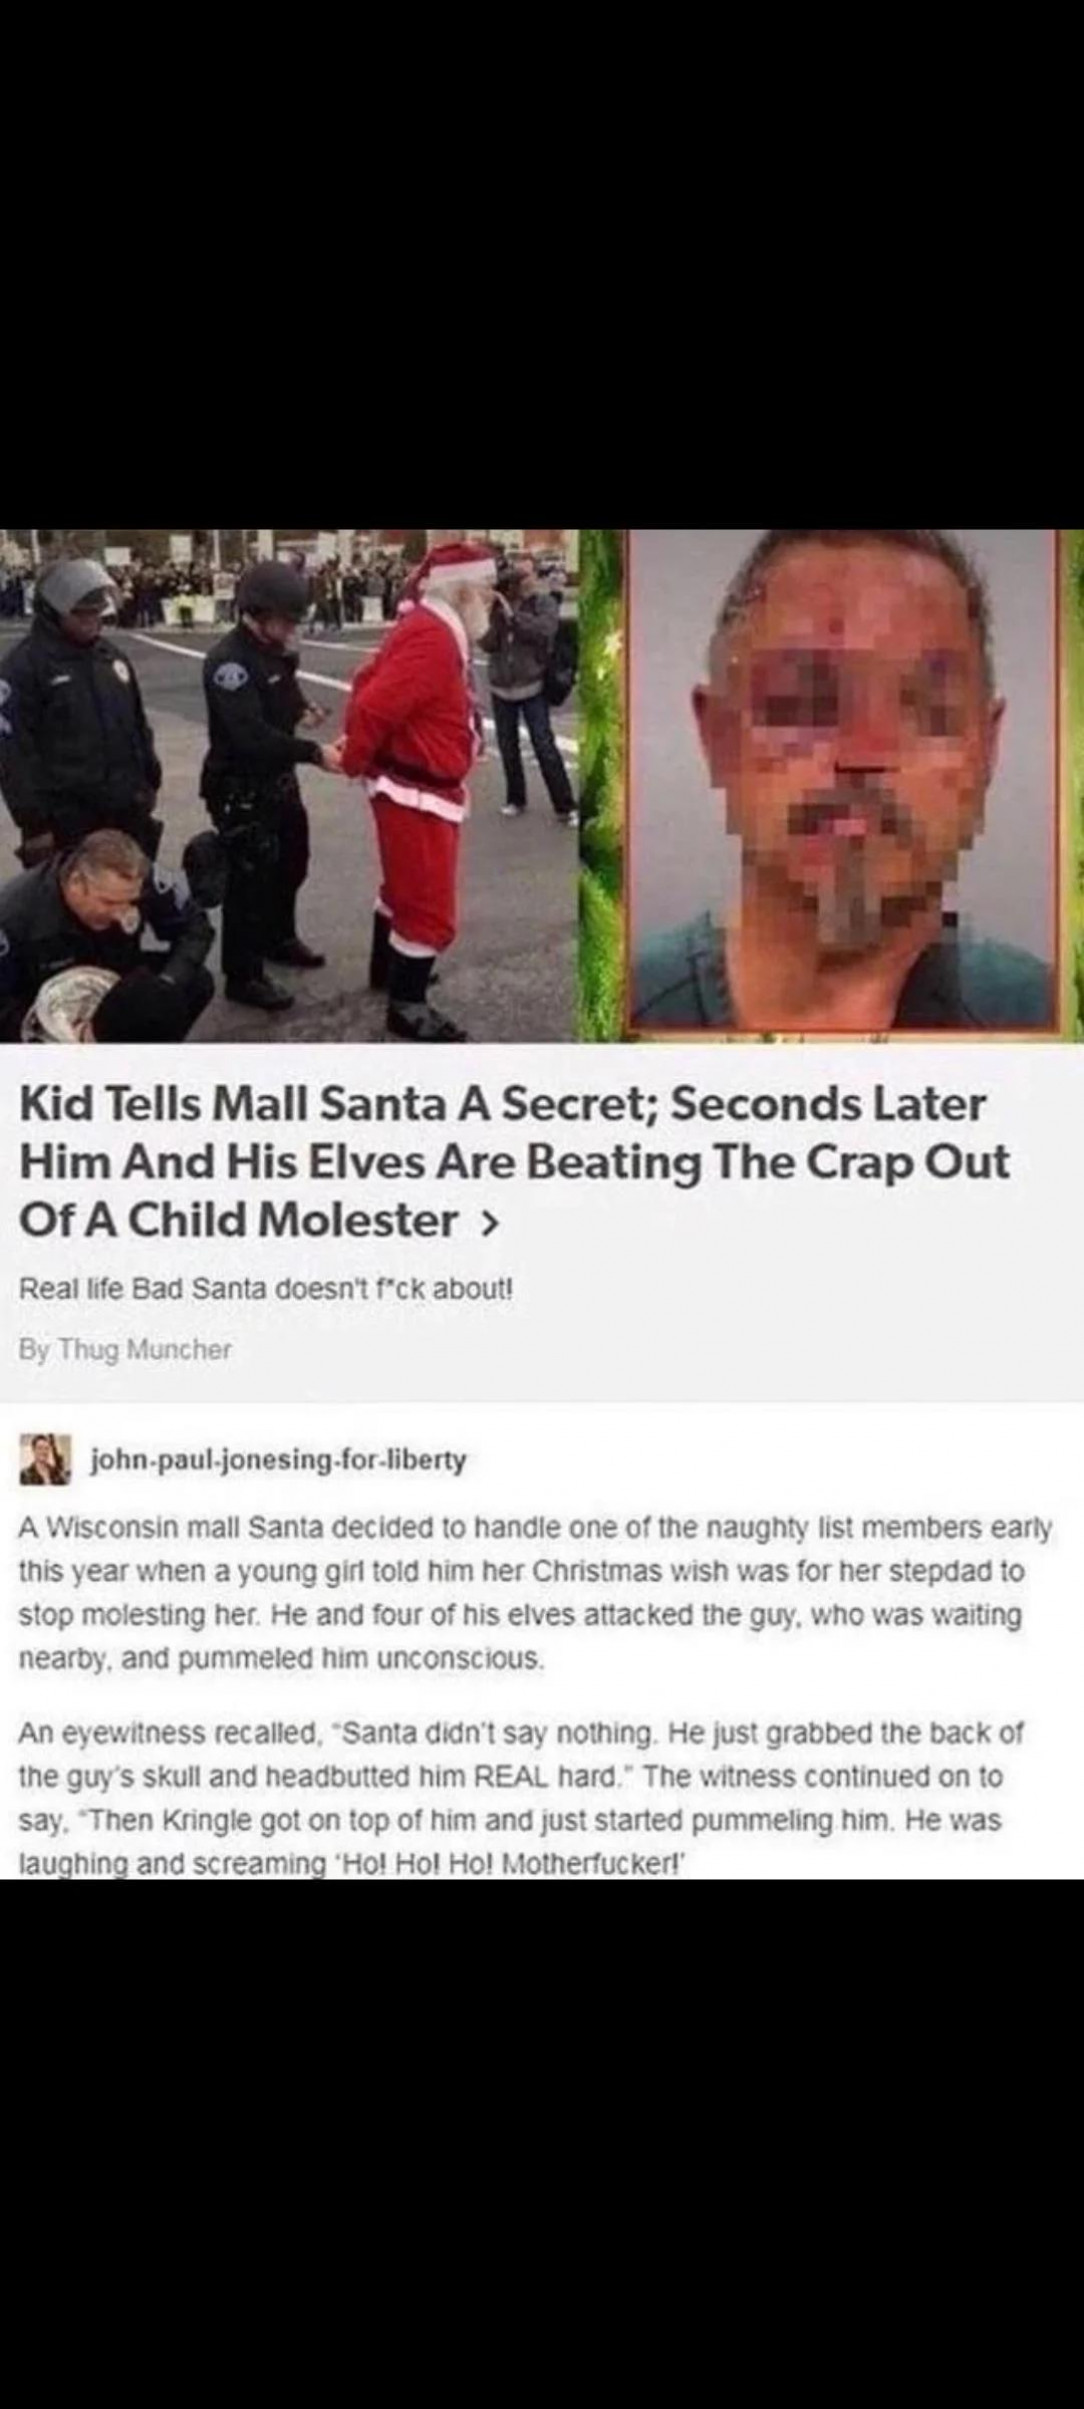 Mall Santa, beater of child molester and bringer of the Christmas spirit